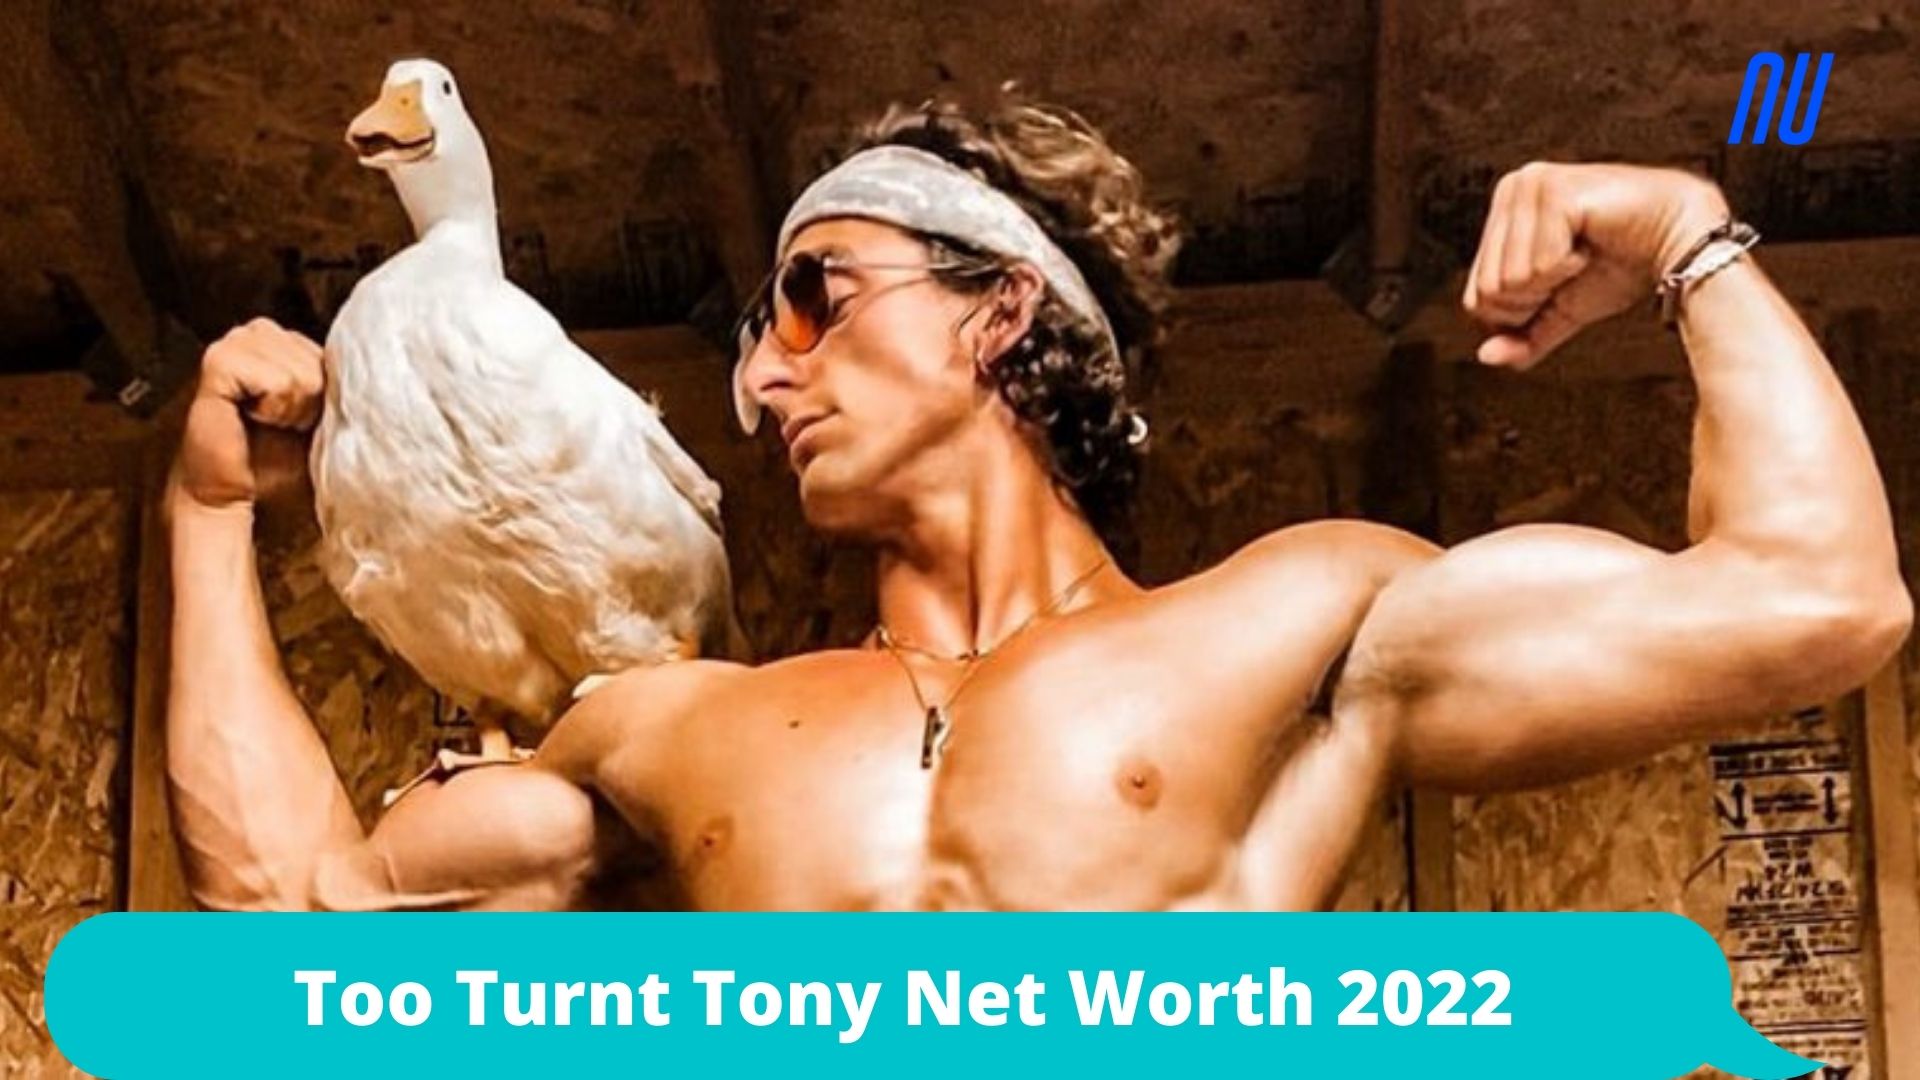 Too Turnt Tony Net Worth 2022